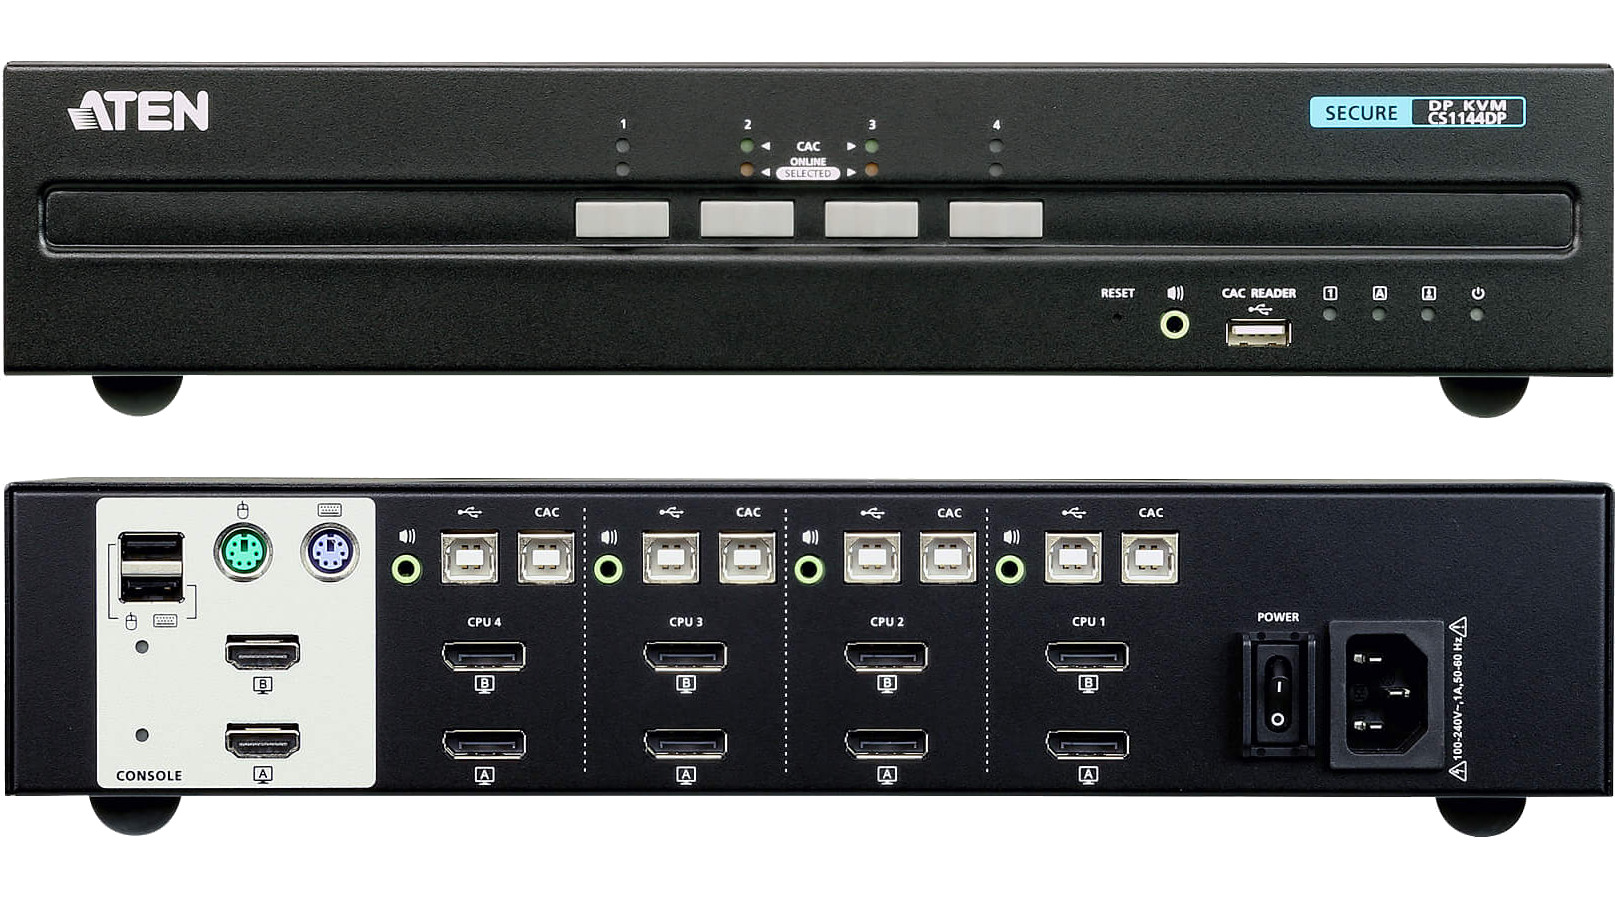 4-Port USB DisplayPort Dual Display Secure KVM Switch (PSS PP v3.0 Compliant)